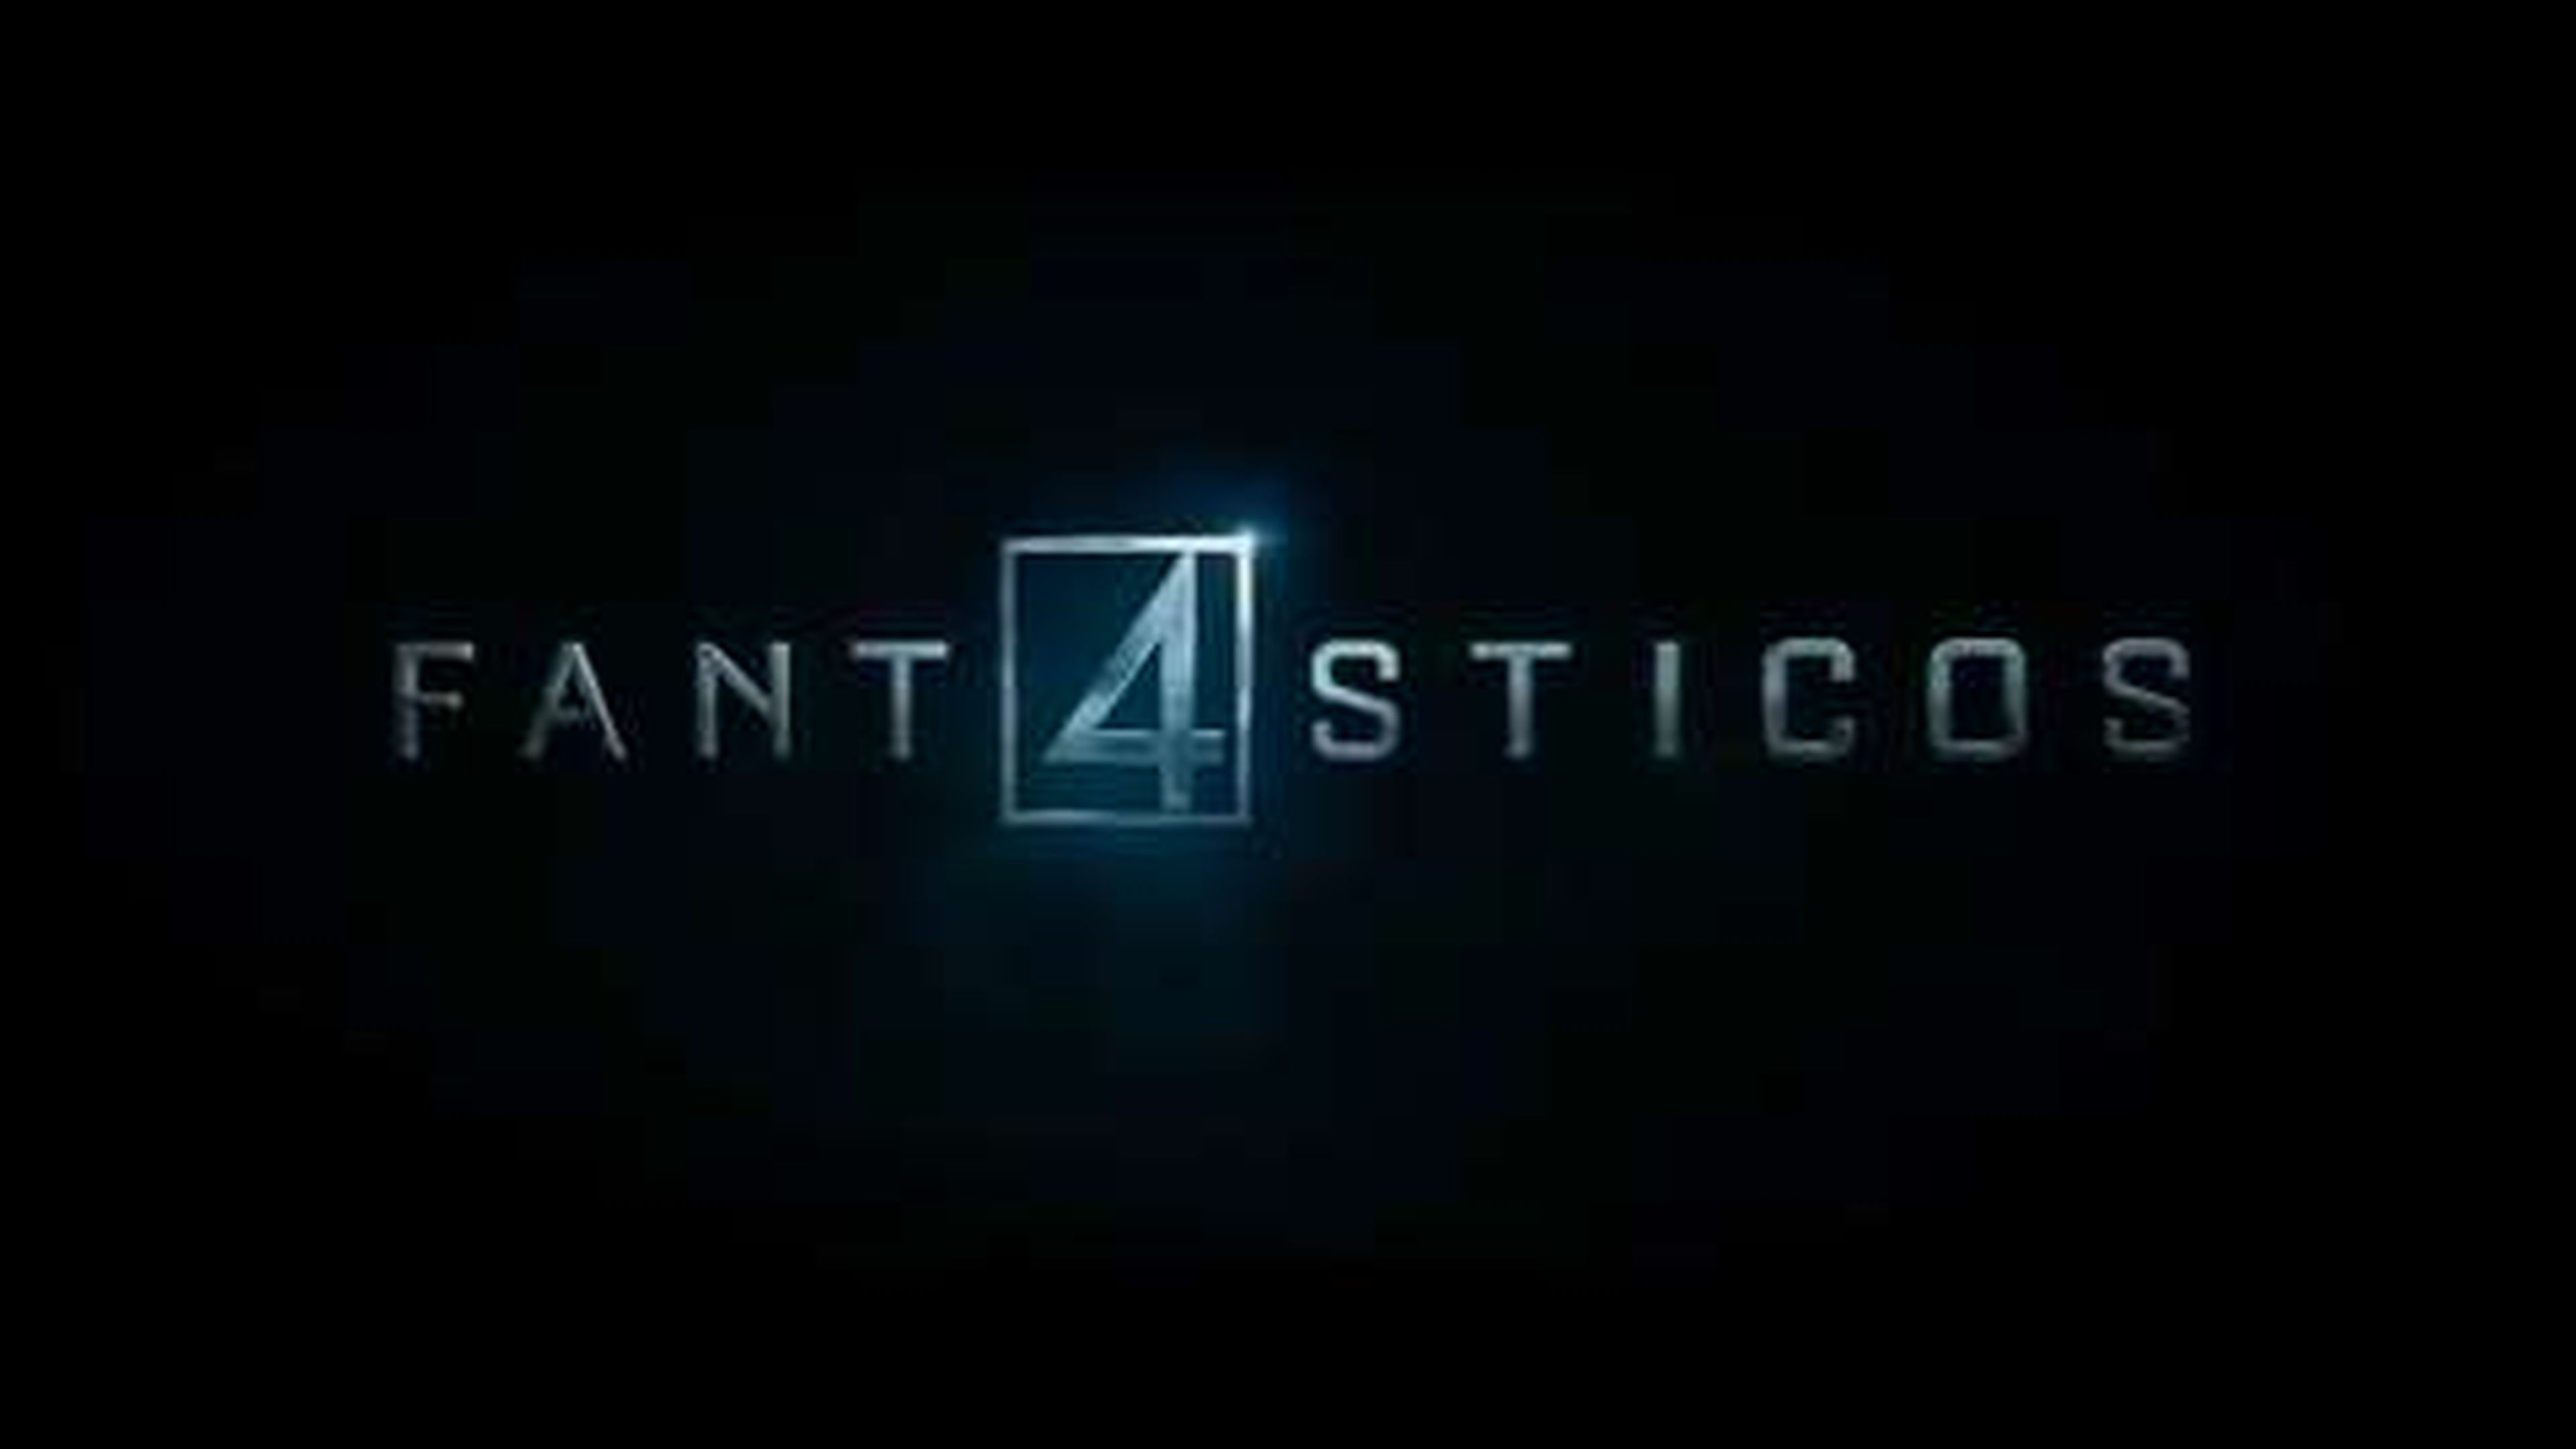 Cuatro Fantásticos - Teaser Trailer - Oficial HD castellano